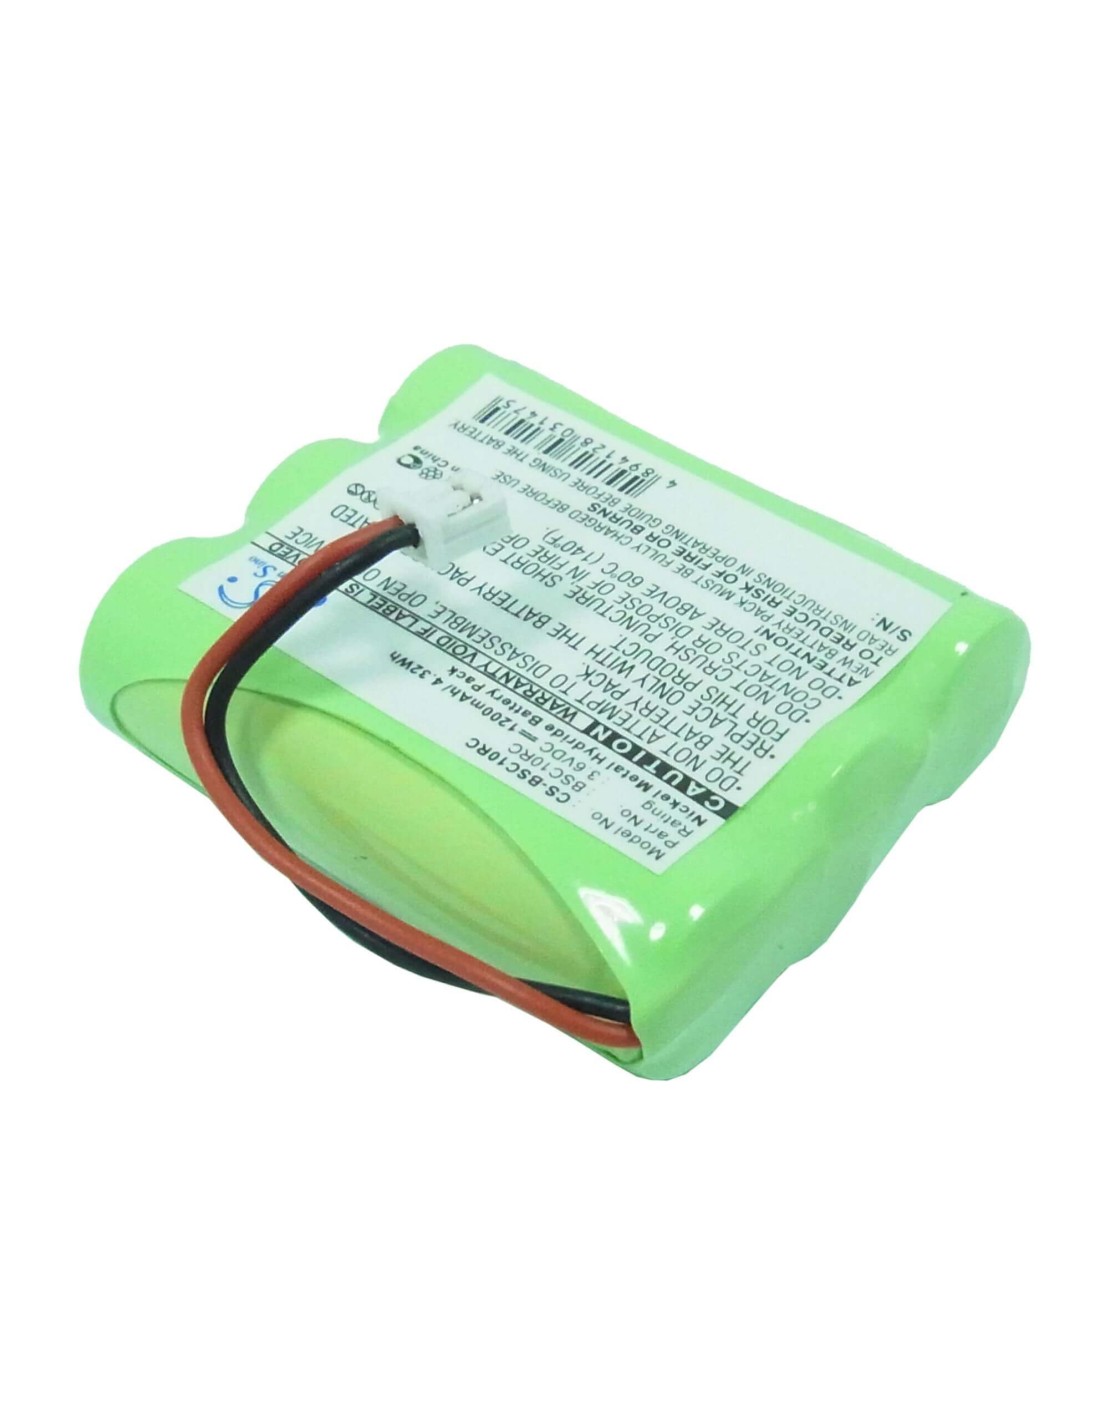 Battery for Binatone, Unit1 3.6V, 1200mah - 4.32Wh